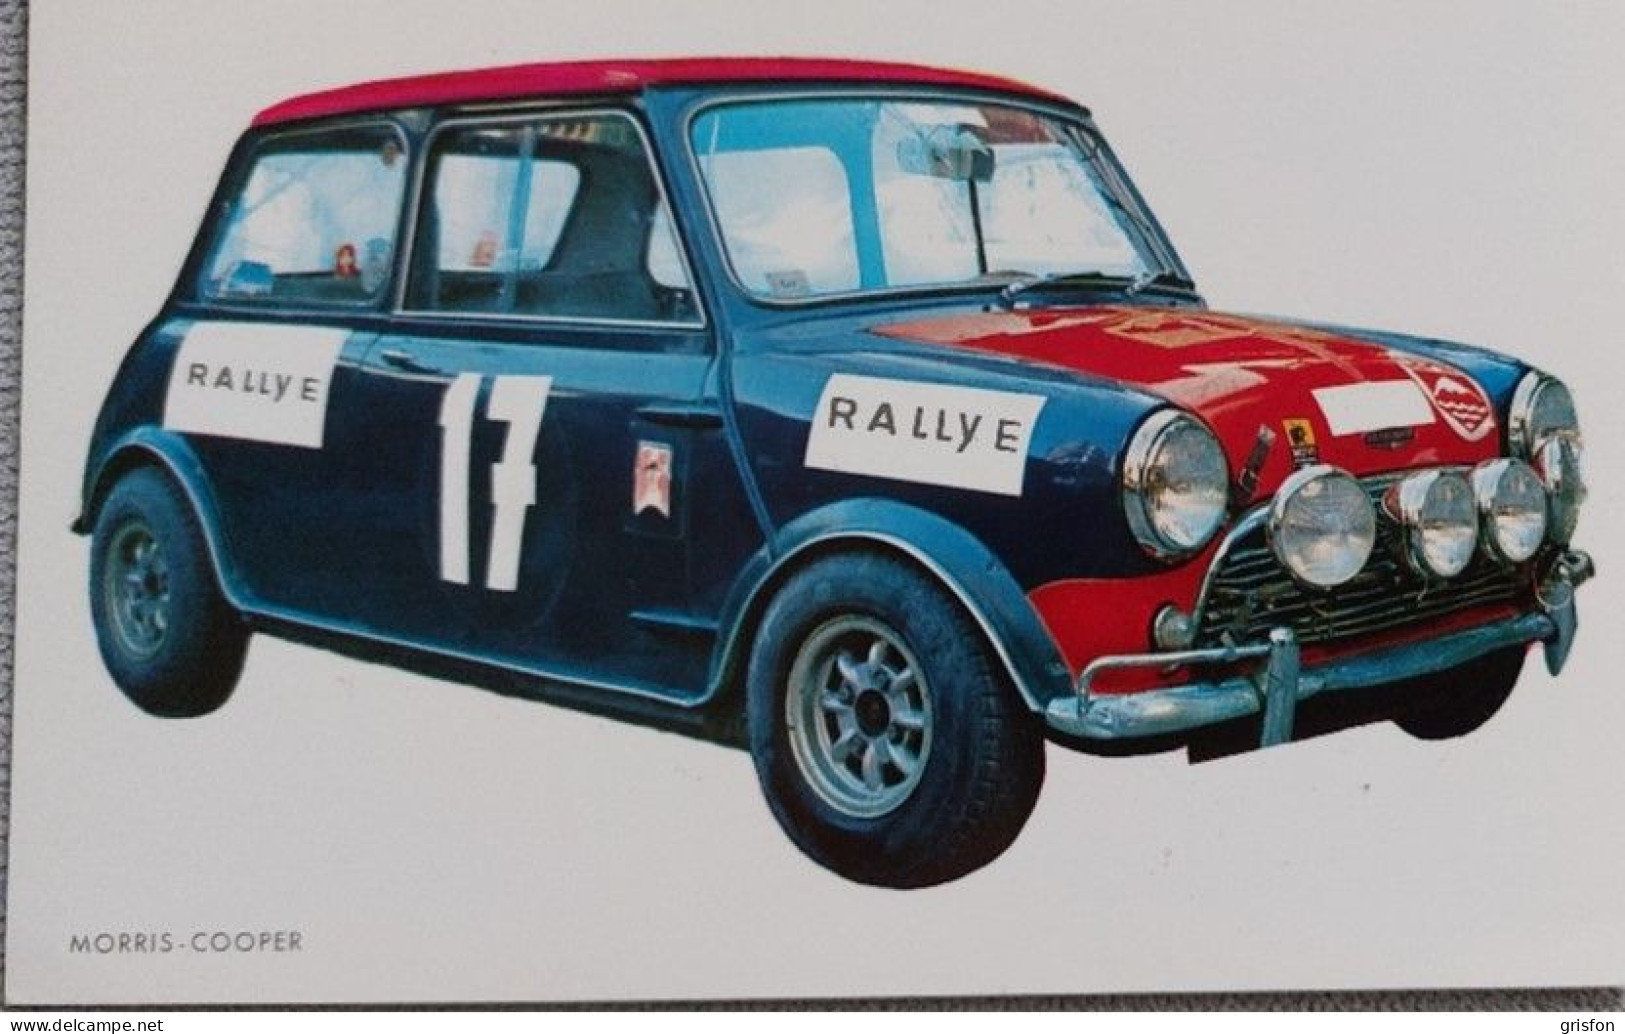 Morris Cooper - Rallyes